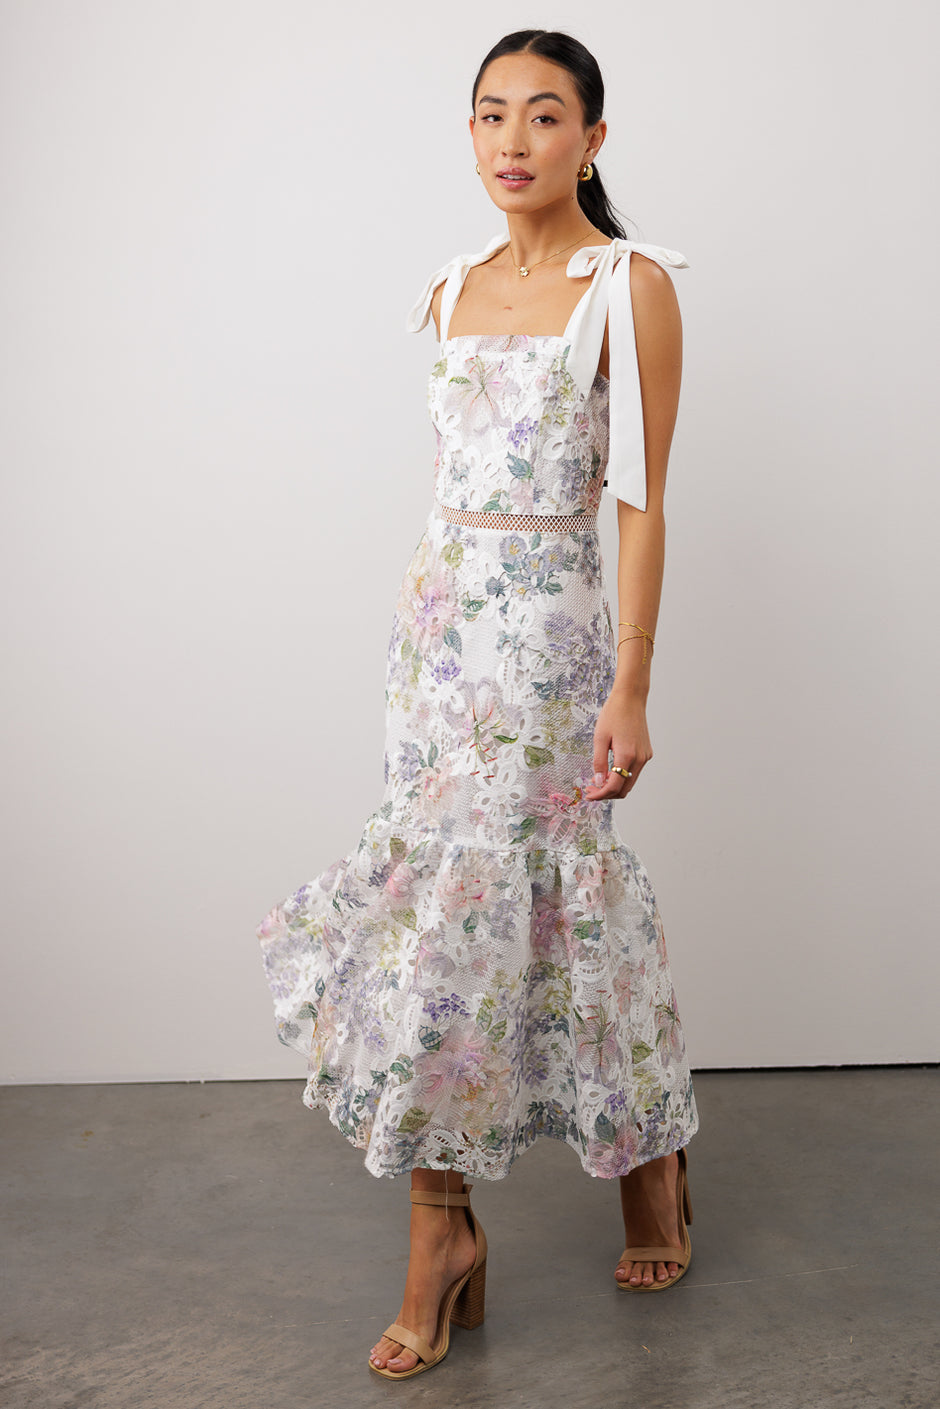 Women’s Dresses | Explore Floral, Neutral, Maxi, Midi & Mini Options ...